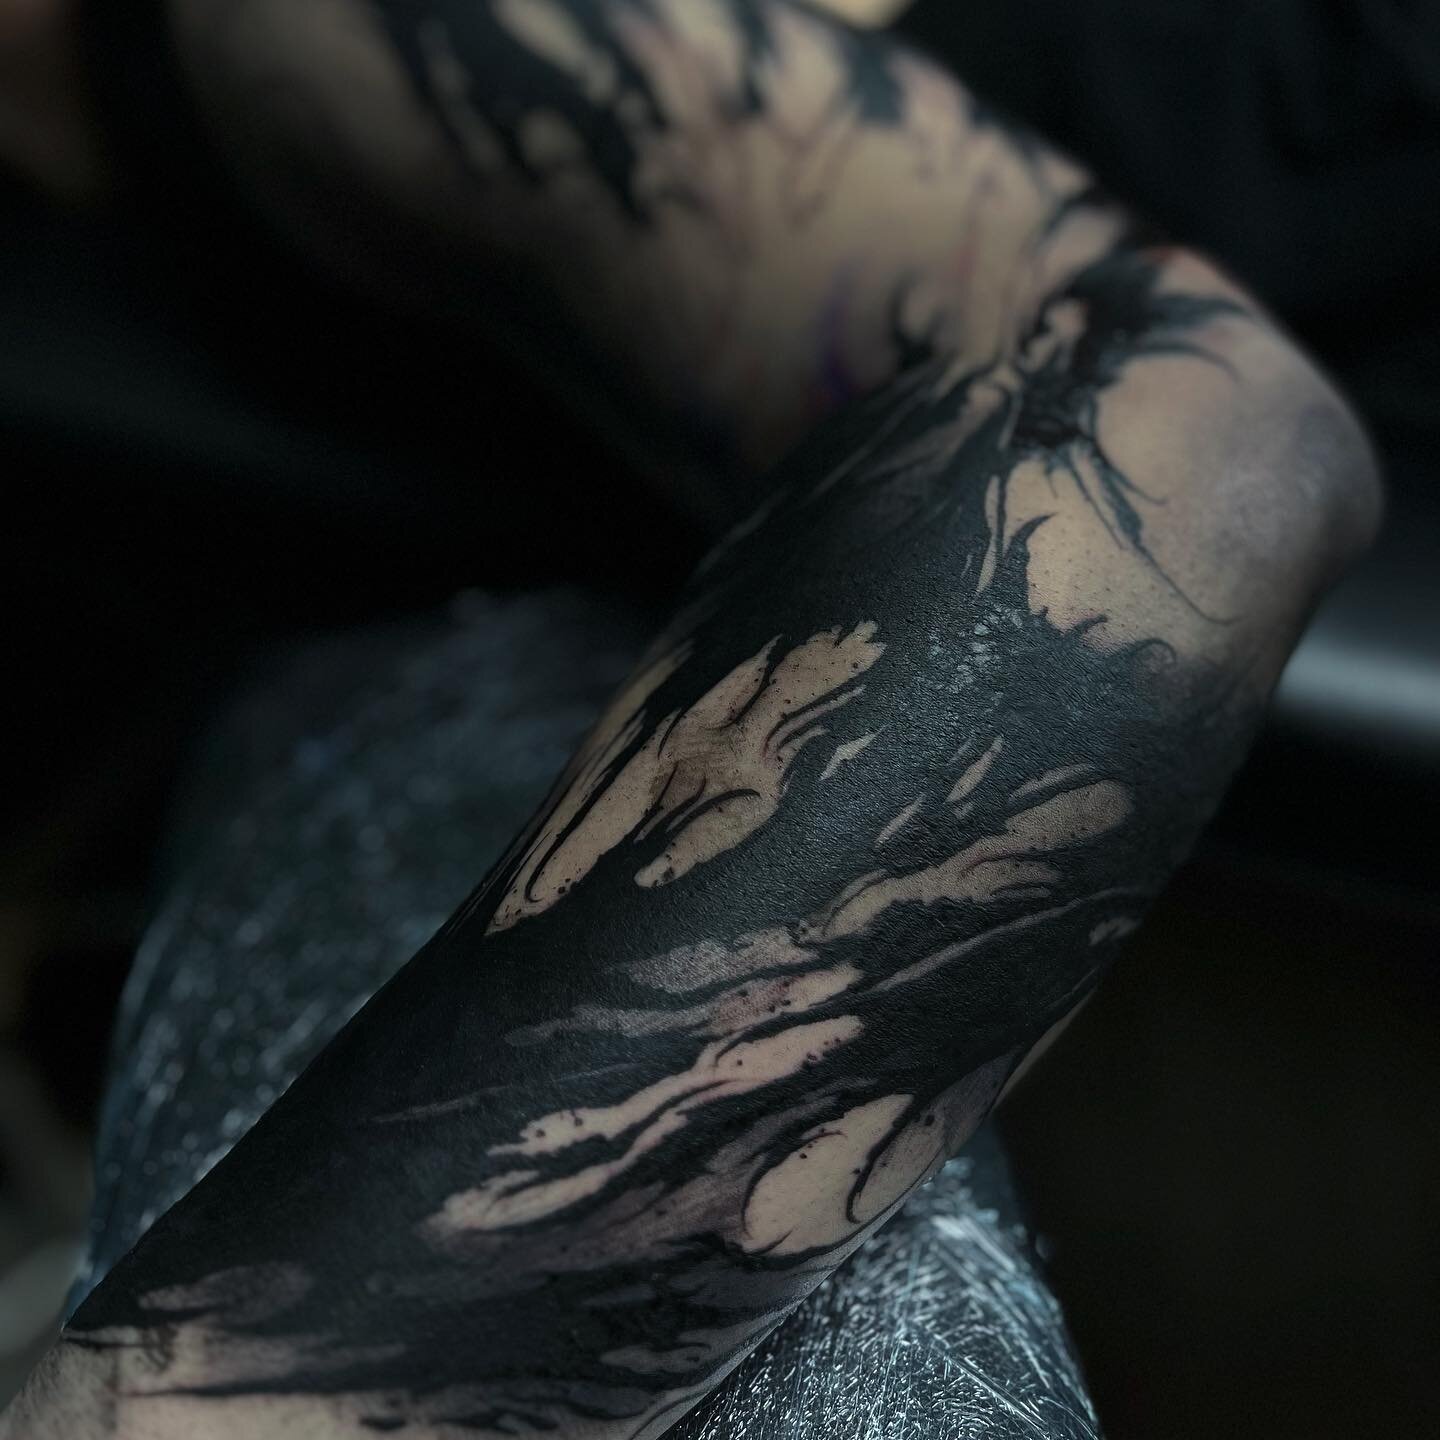 Blackwork closeup .
.
.
#tattoo #blackwork #abstract #inked #abstracttattoo #goodvibes #tattu  #sleeve #progress #arms #gothicstyle  #gothictattio #blackworktattoo